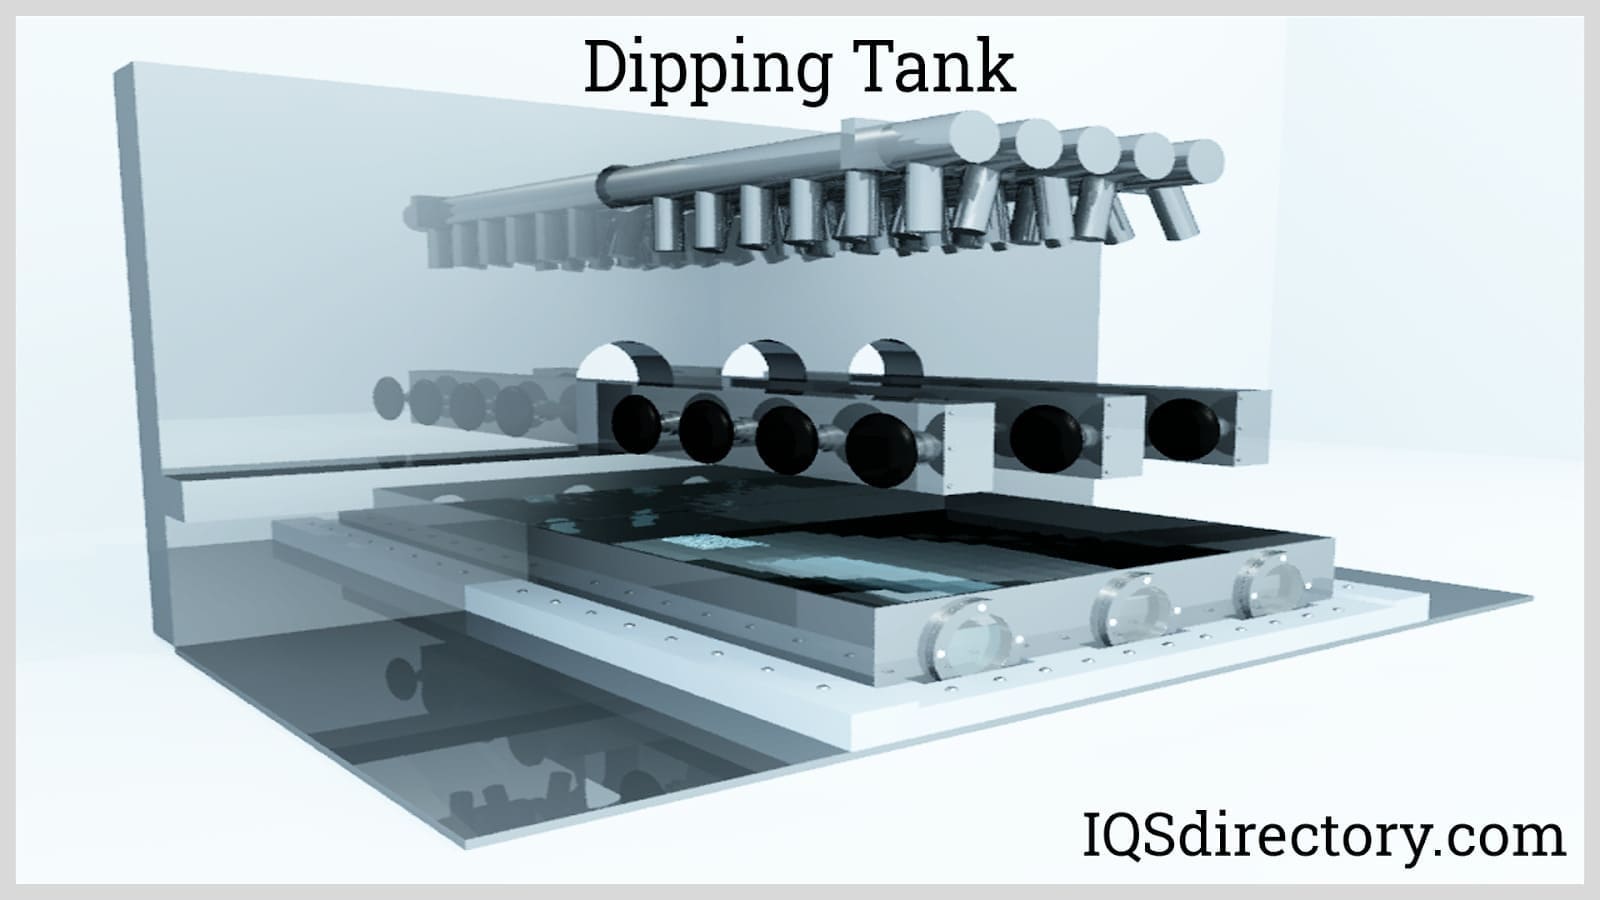  Dipping Tank